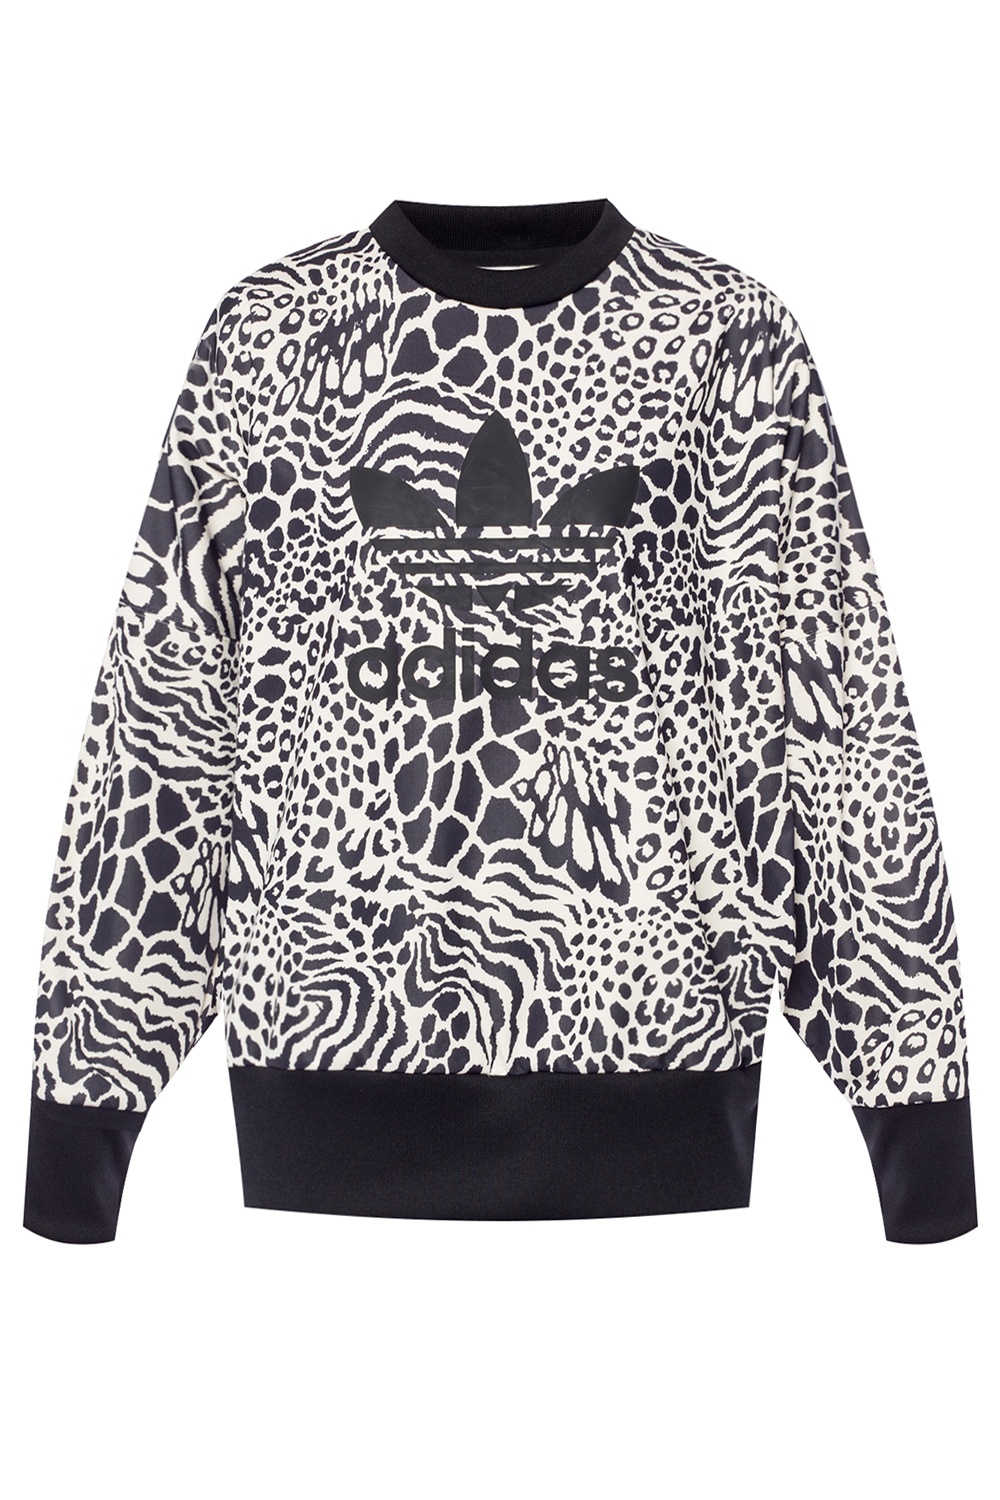 adidas cheetah print shirt